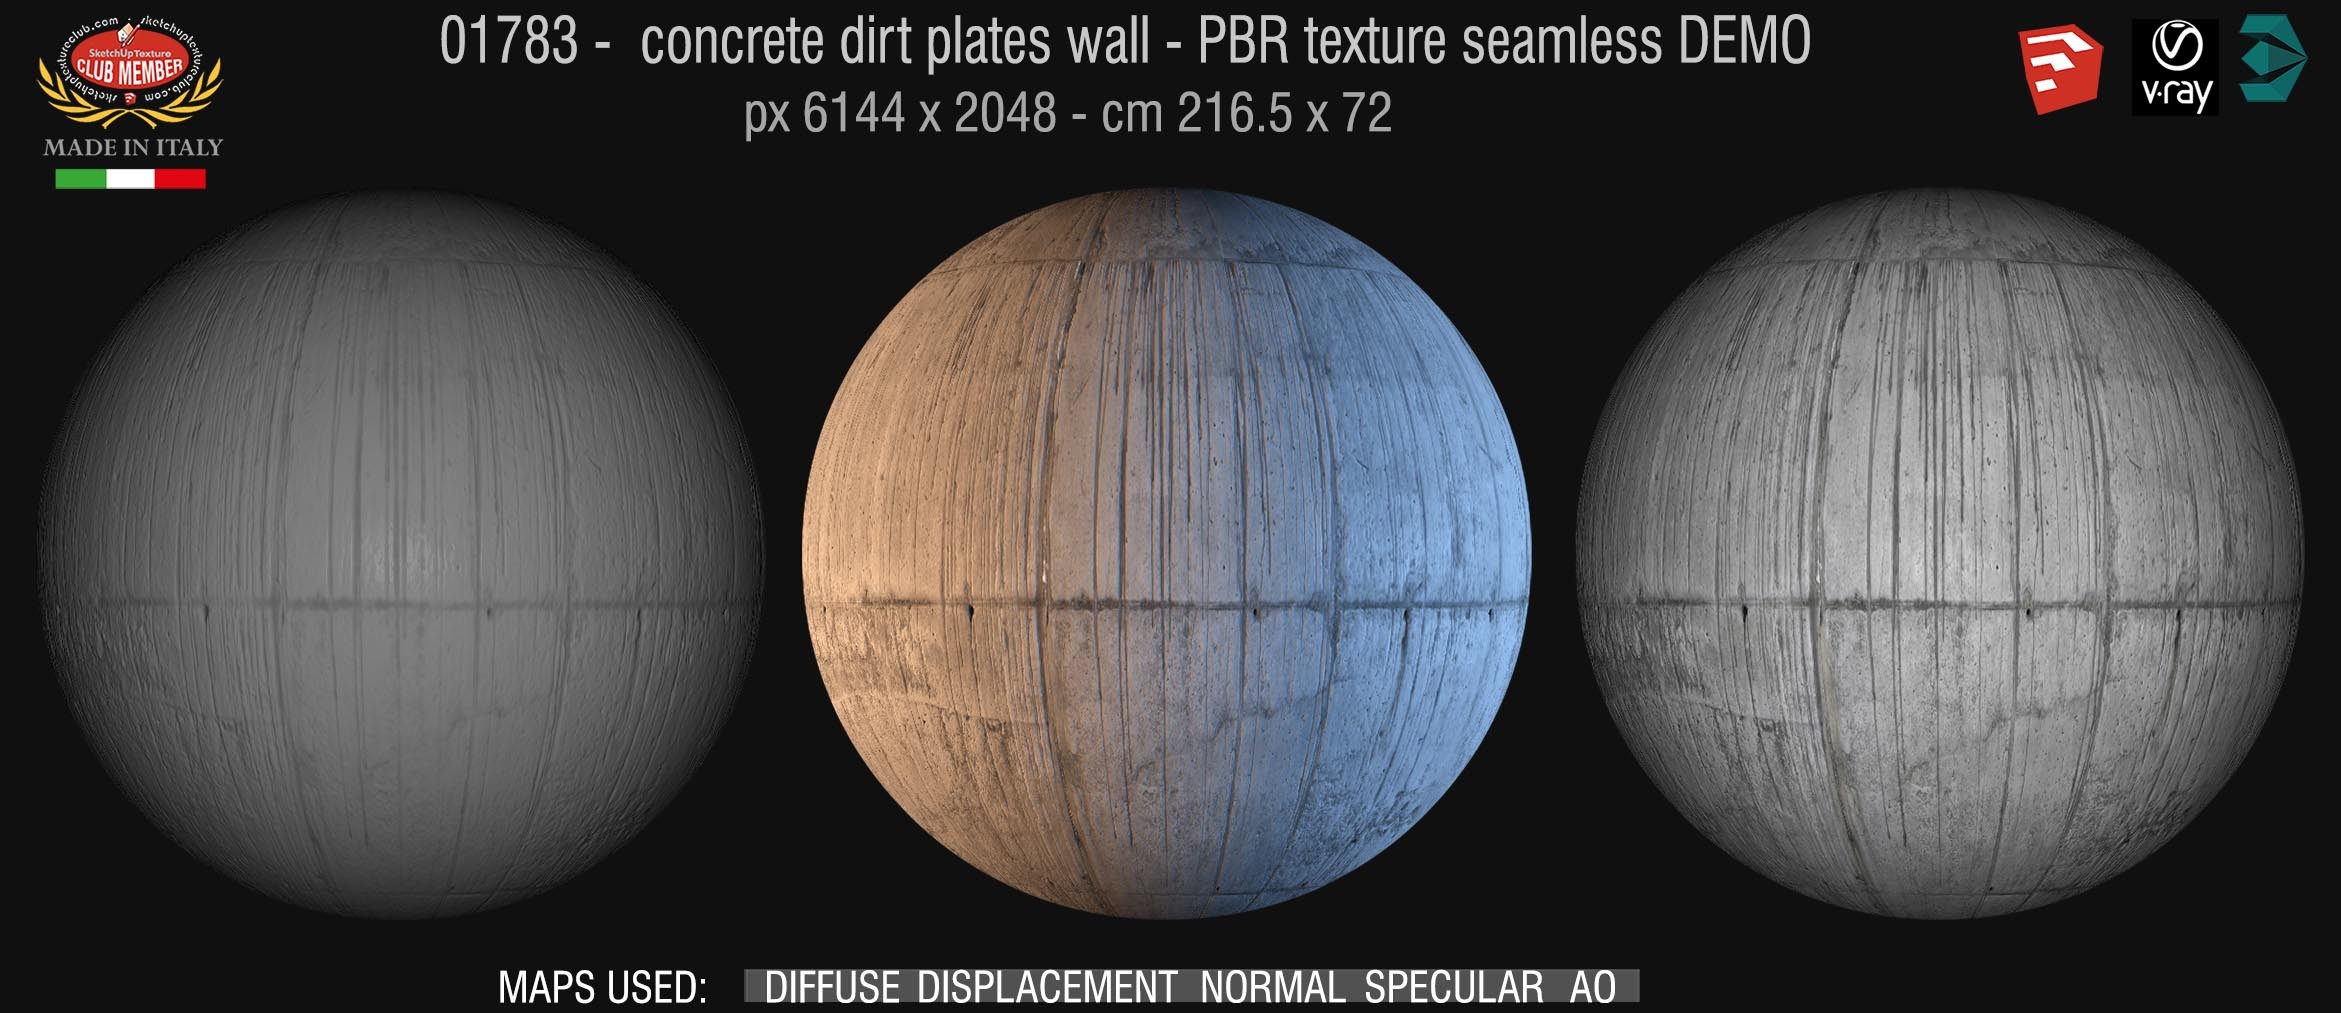 01783 concrete dirt plates wall PBR texture seamless DEMO